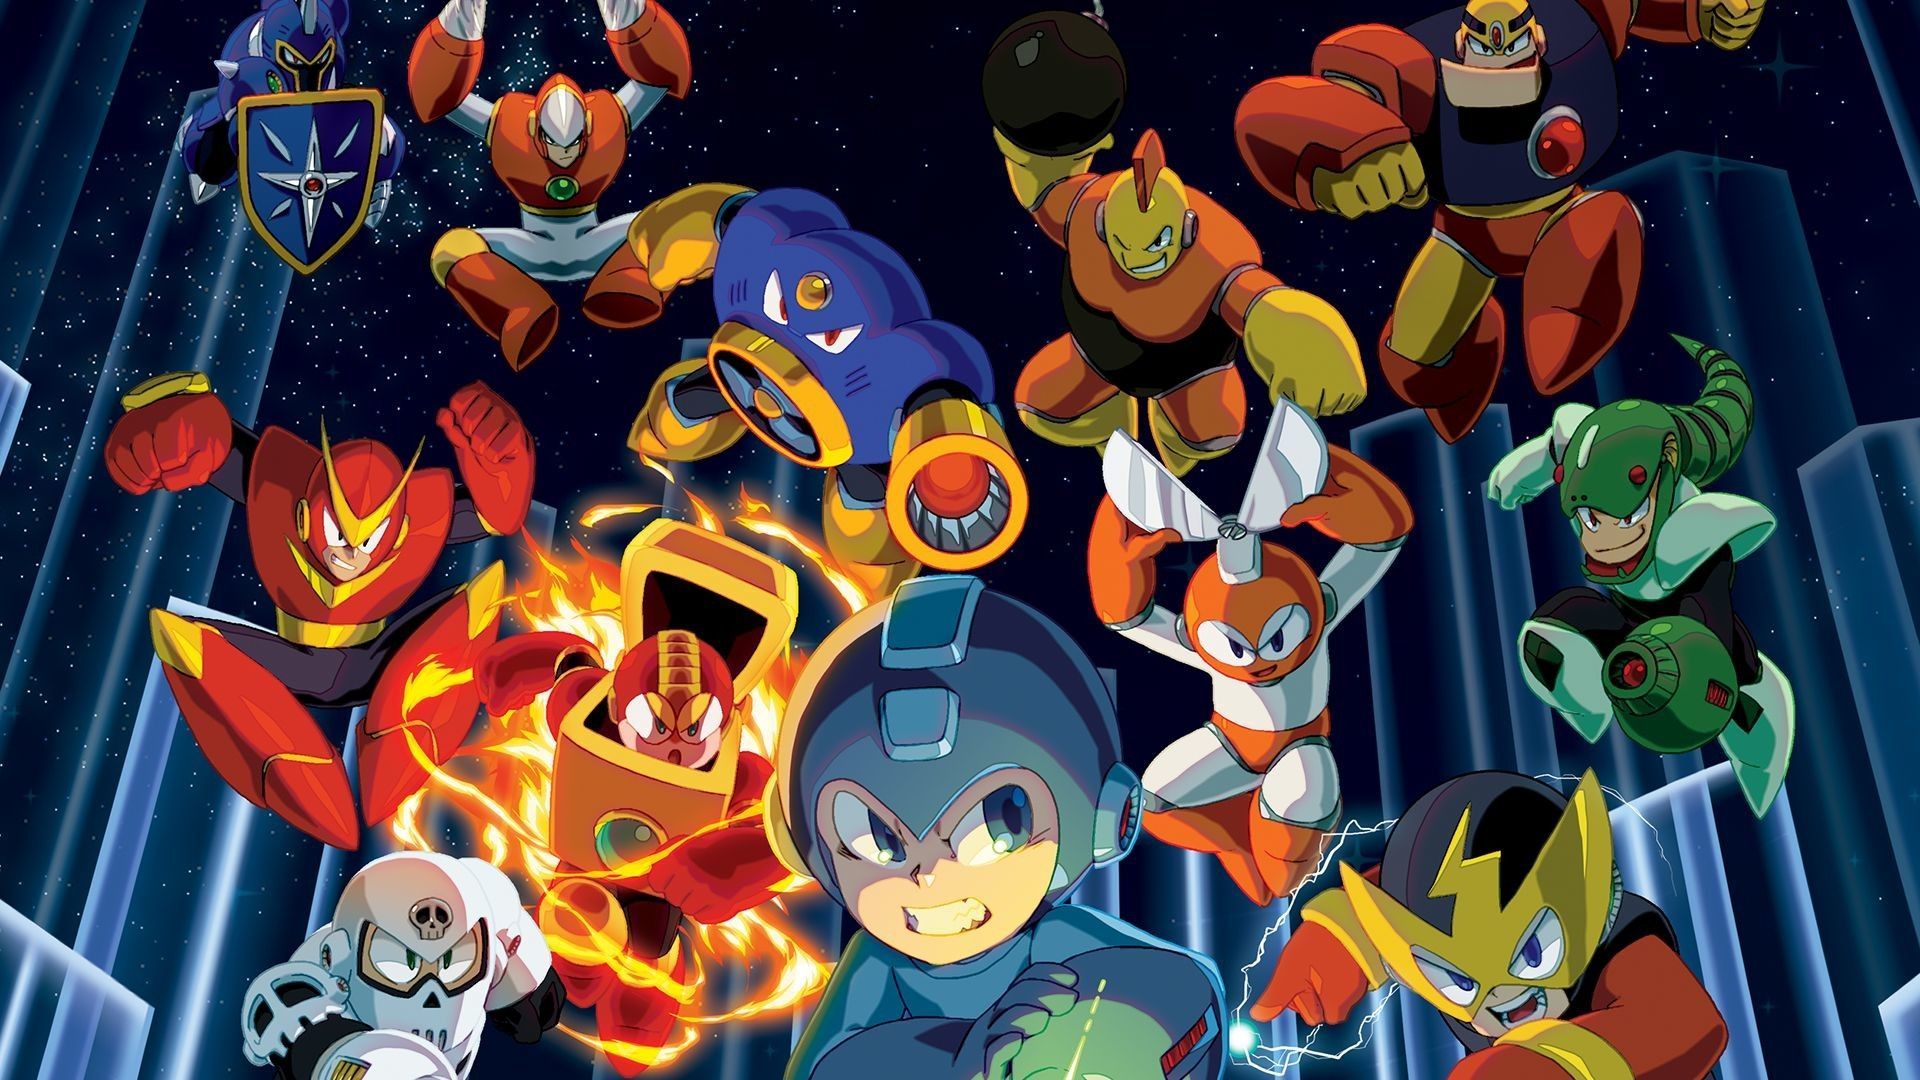 Mega Man Wallpaper Free Mega Man Background